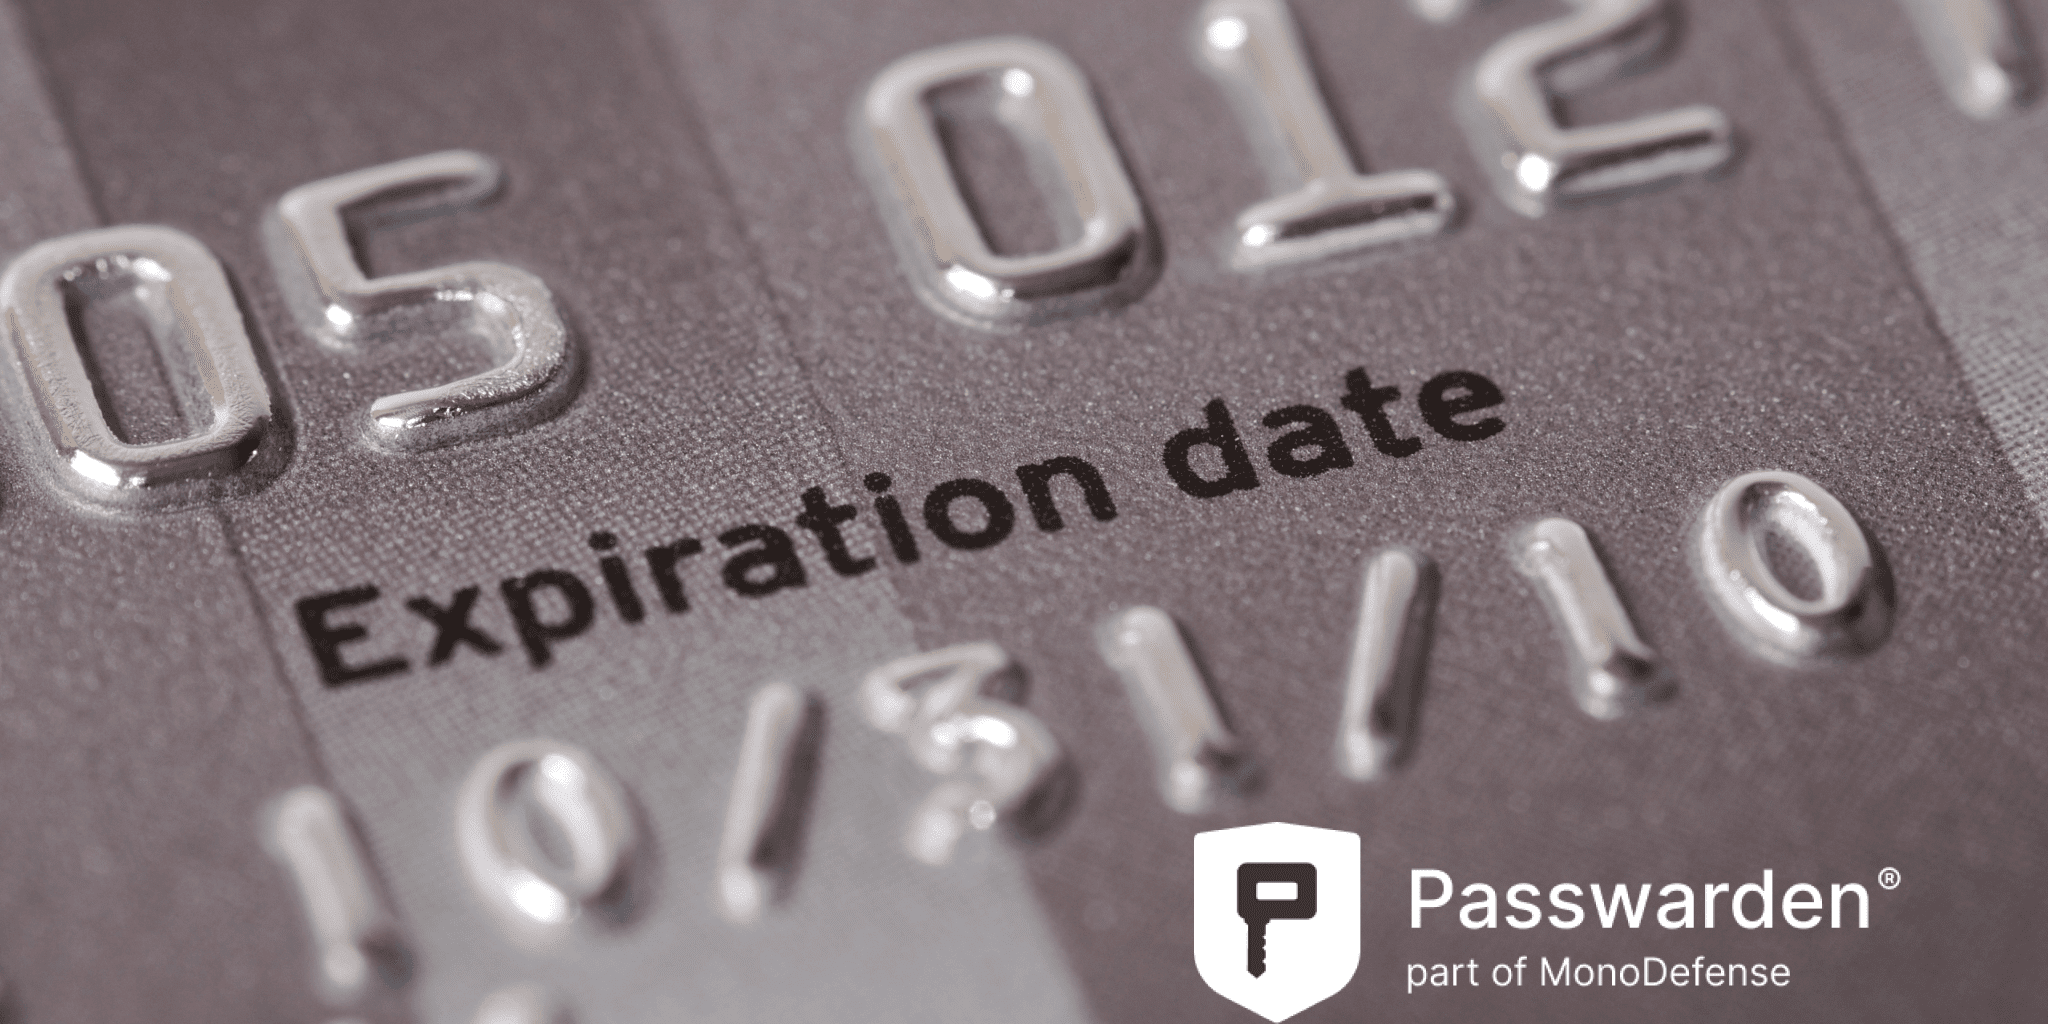 Credit Card Expiration Date